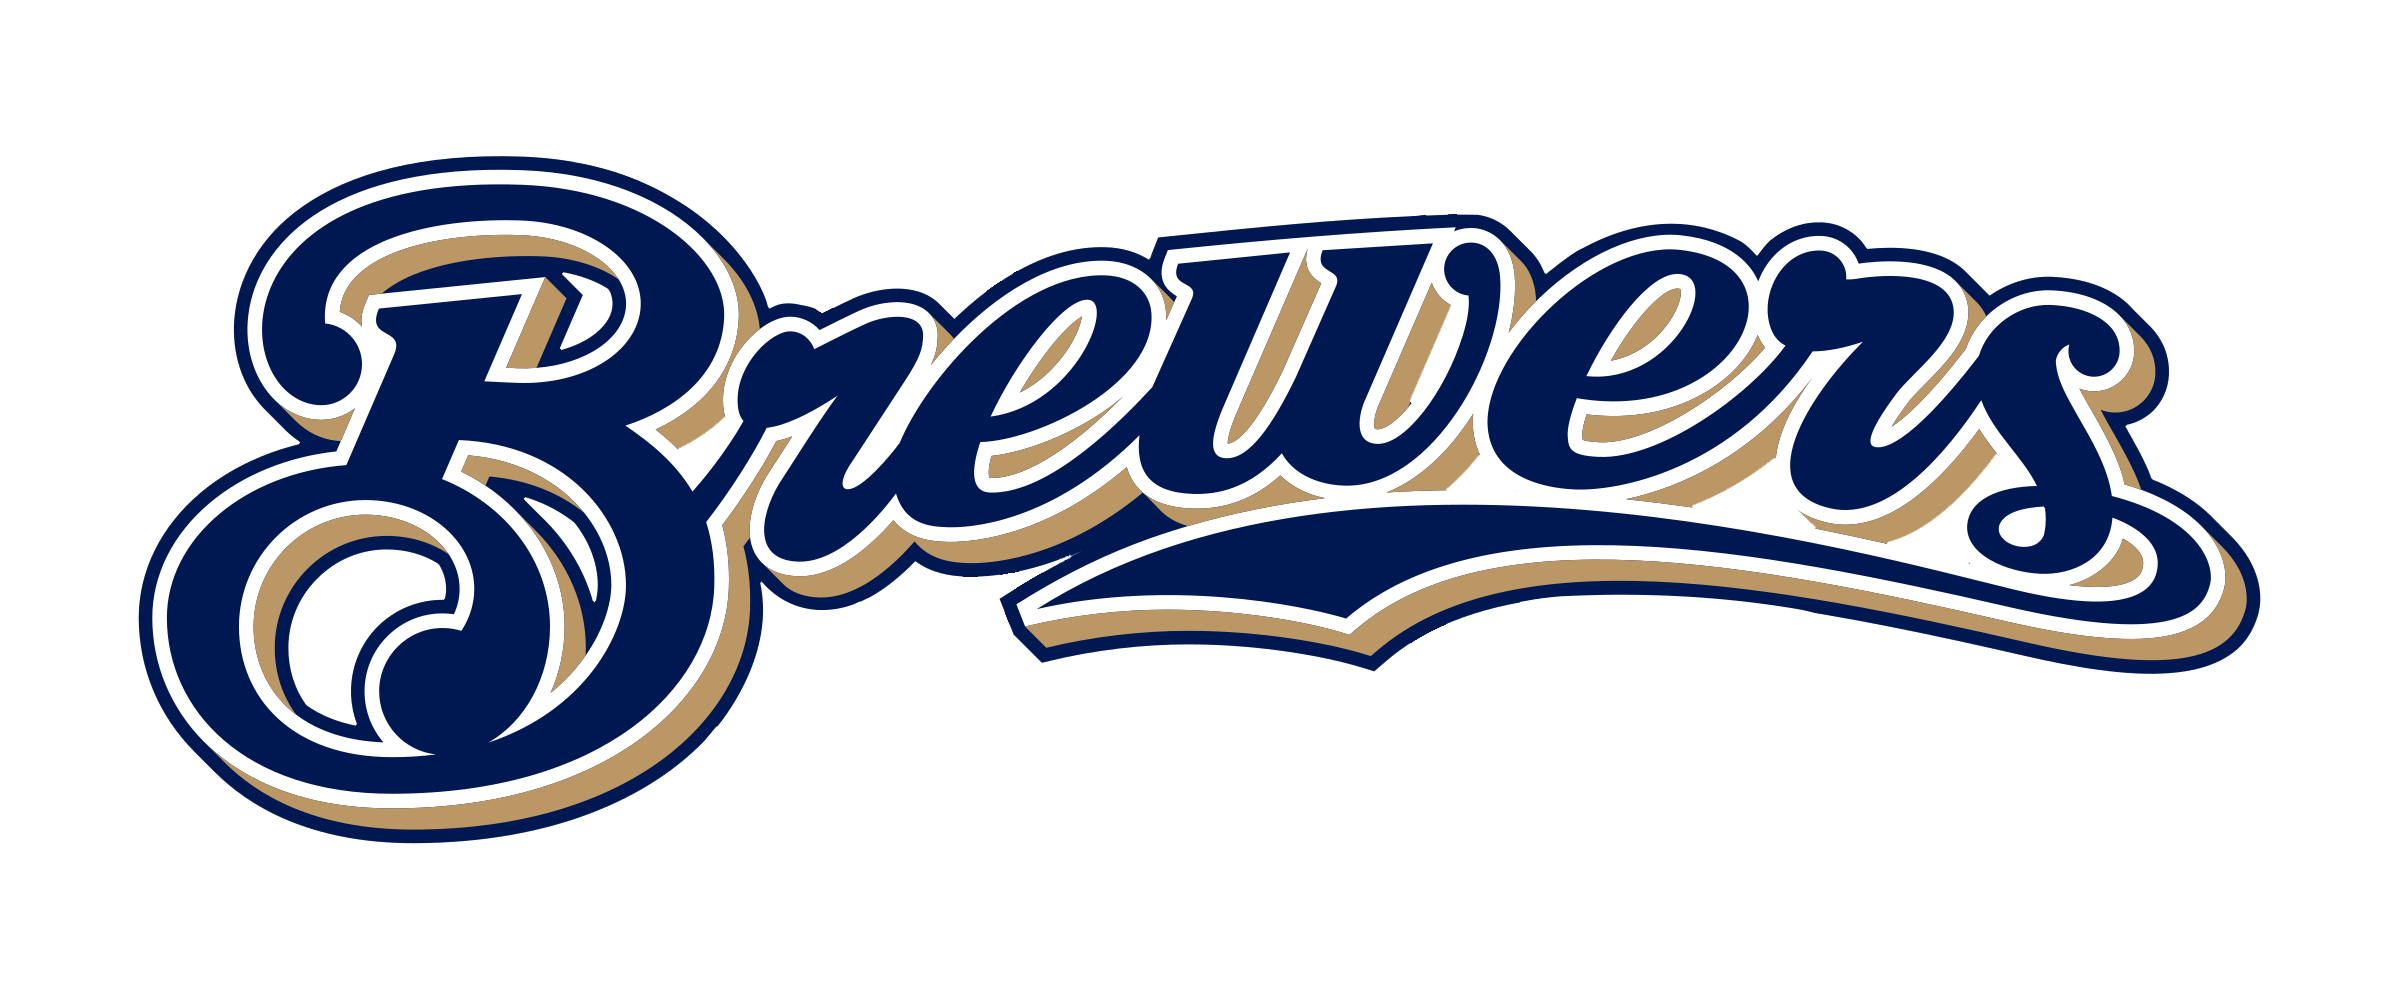 Milwaukee Brewers Logo - Milwaukee Brewers Logo PNG Transparent & SVG Vector